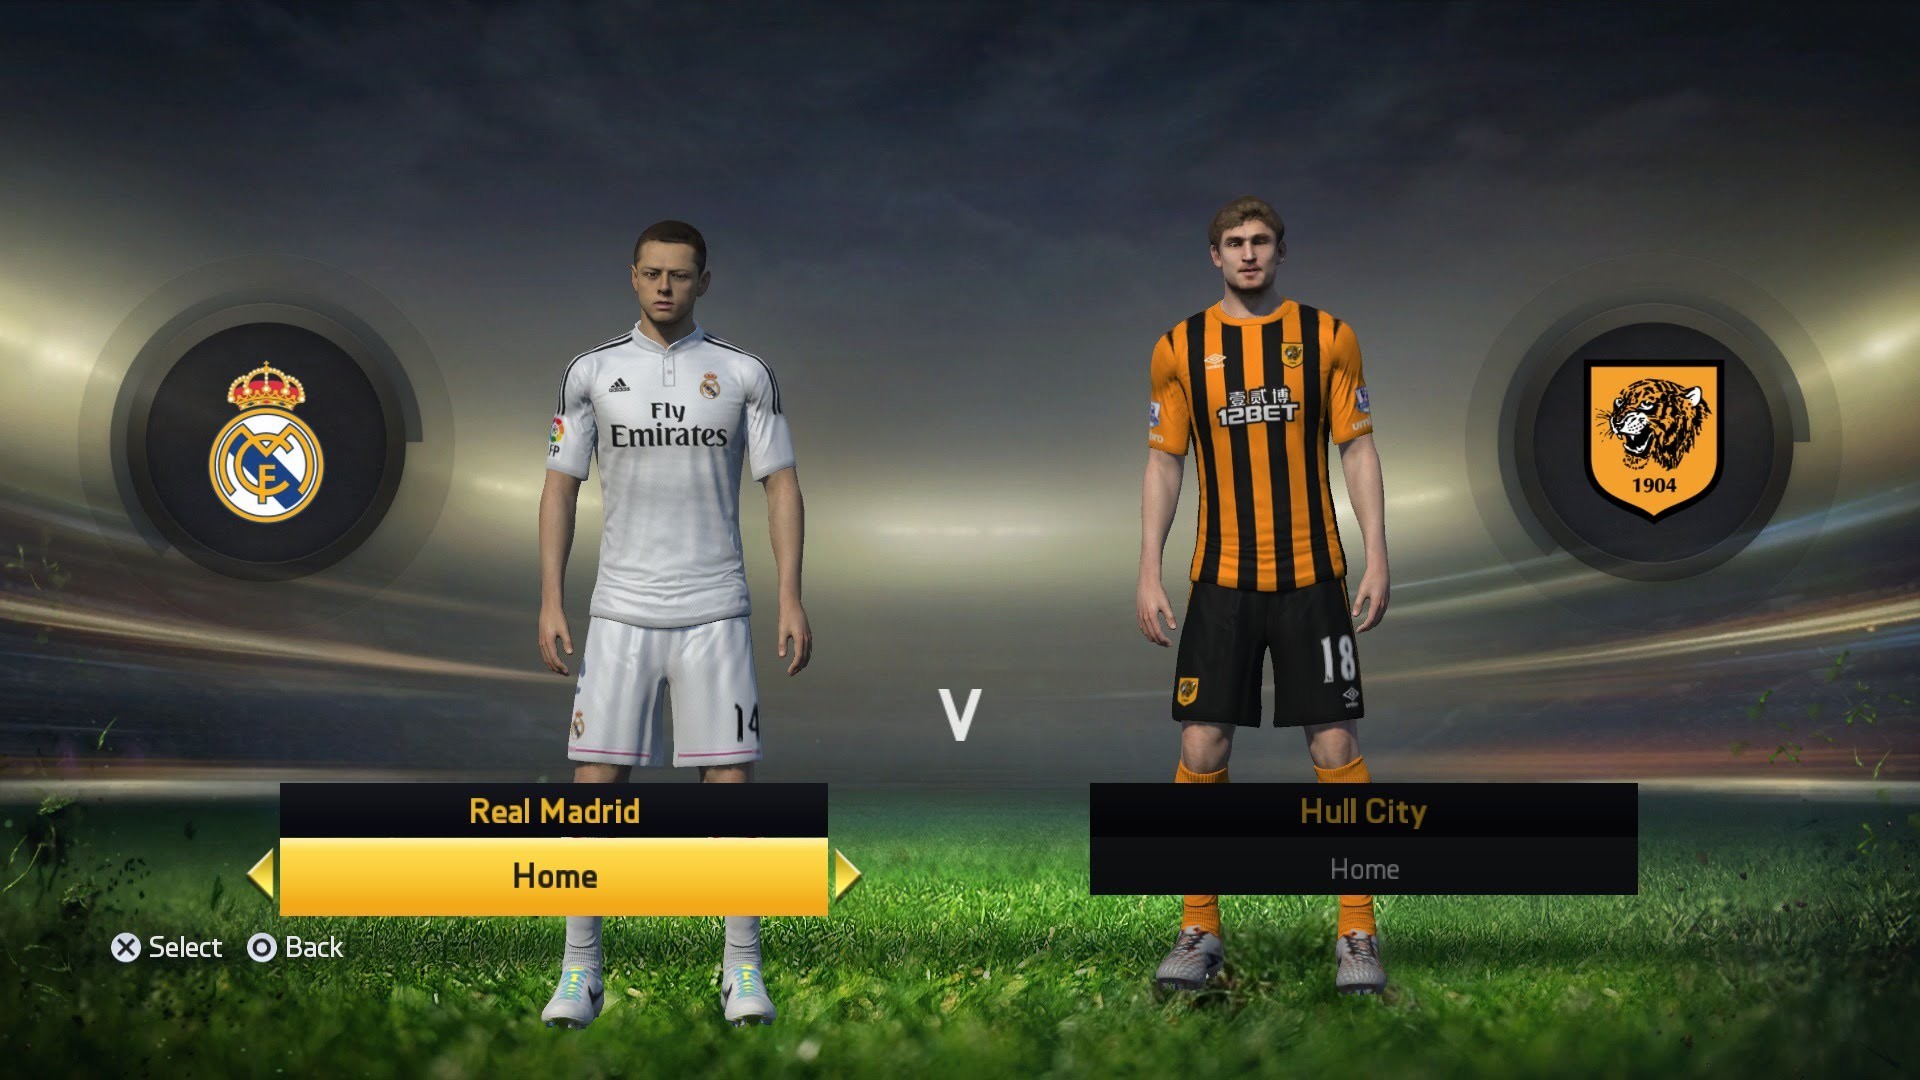 1920x1080 PS4 FIFA 15 Modo Carrera Jugador Javier 'Chicharito' Hernandez EP3 Real  Madrid vs Hull City - YouTube